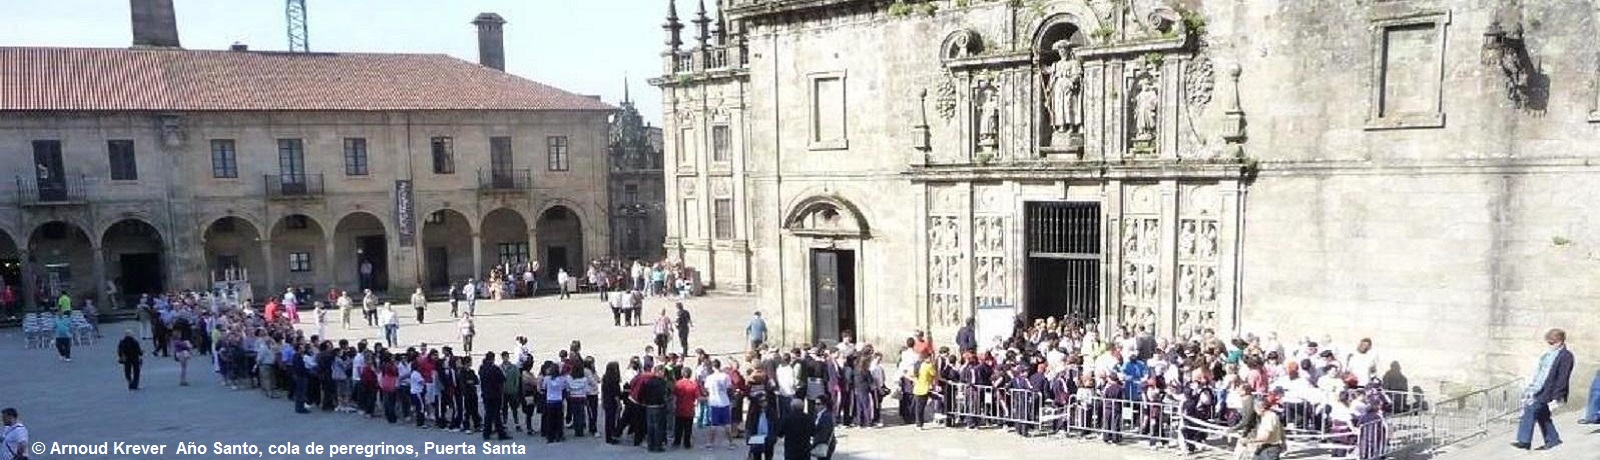 GranadaS 1492 Santiago, lange rij voor de Puerta Santa (2)